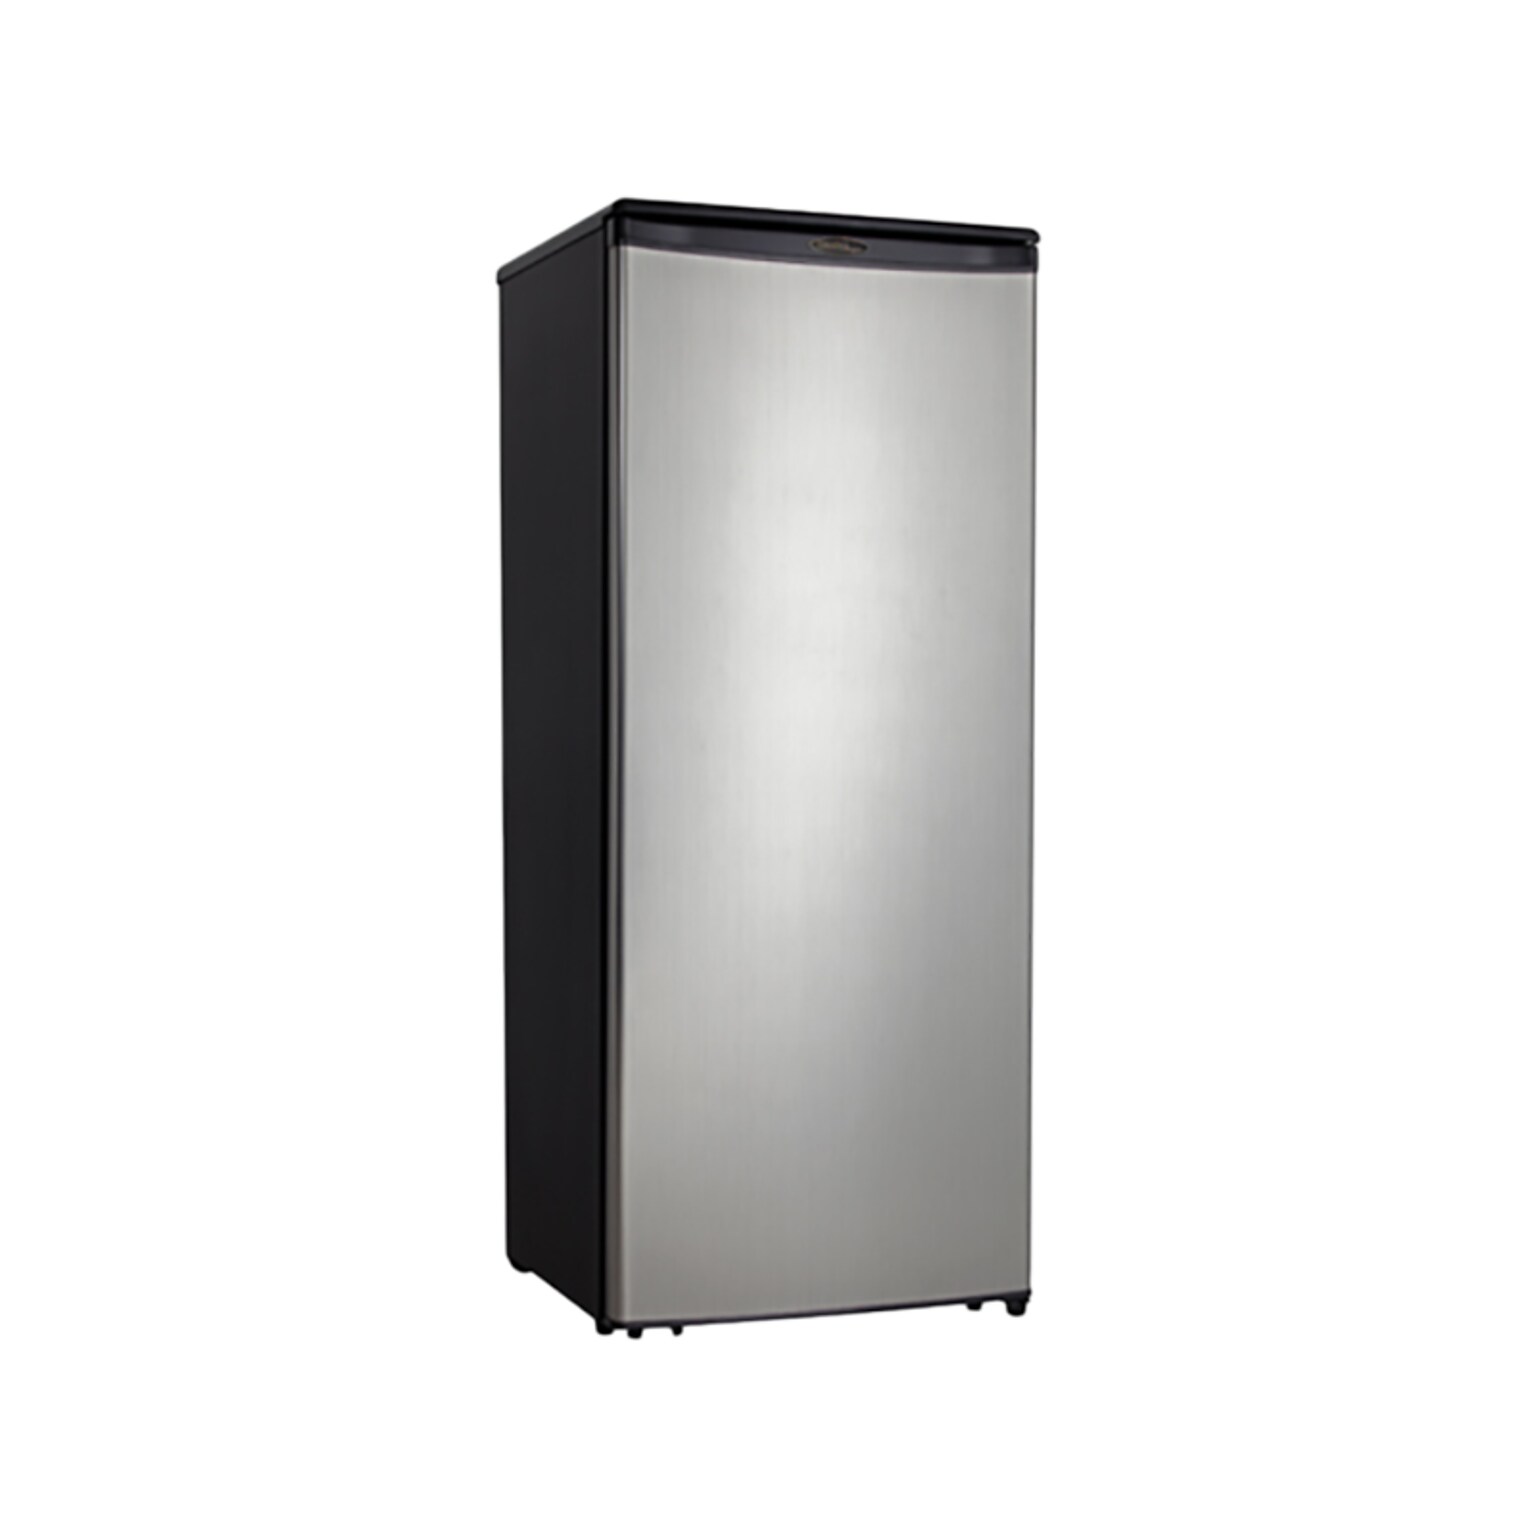 Danby Designer 11 Cu. Ft. Refrigerator, Black/Stainless Steel (DAR110A1BSLDD)